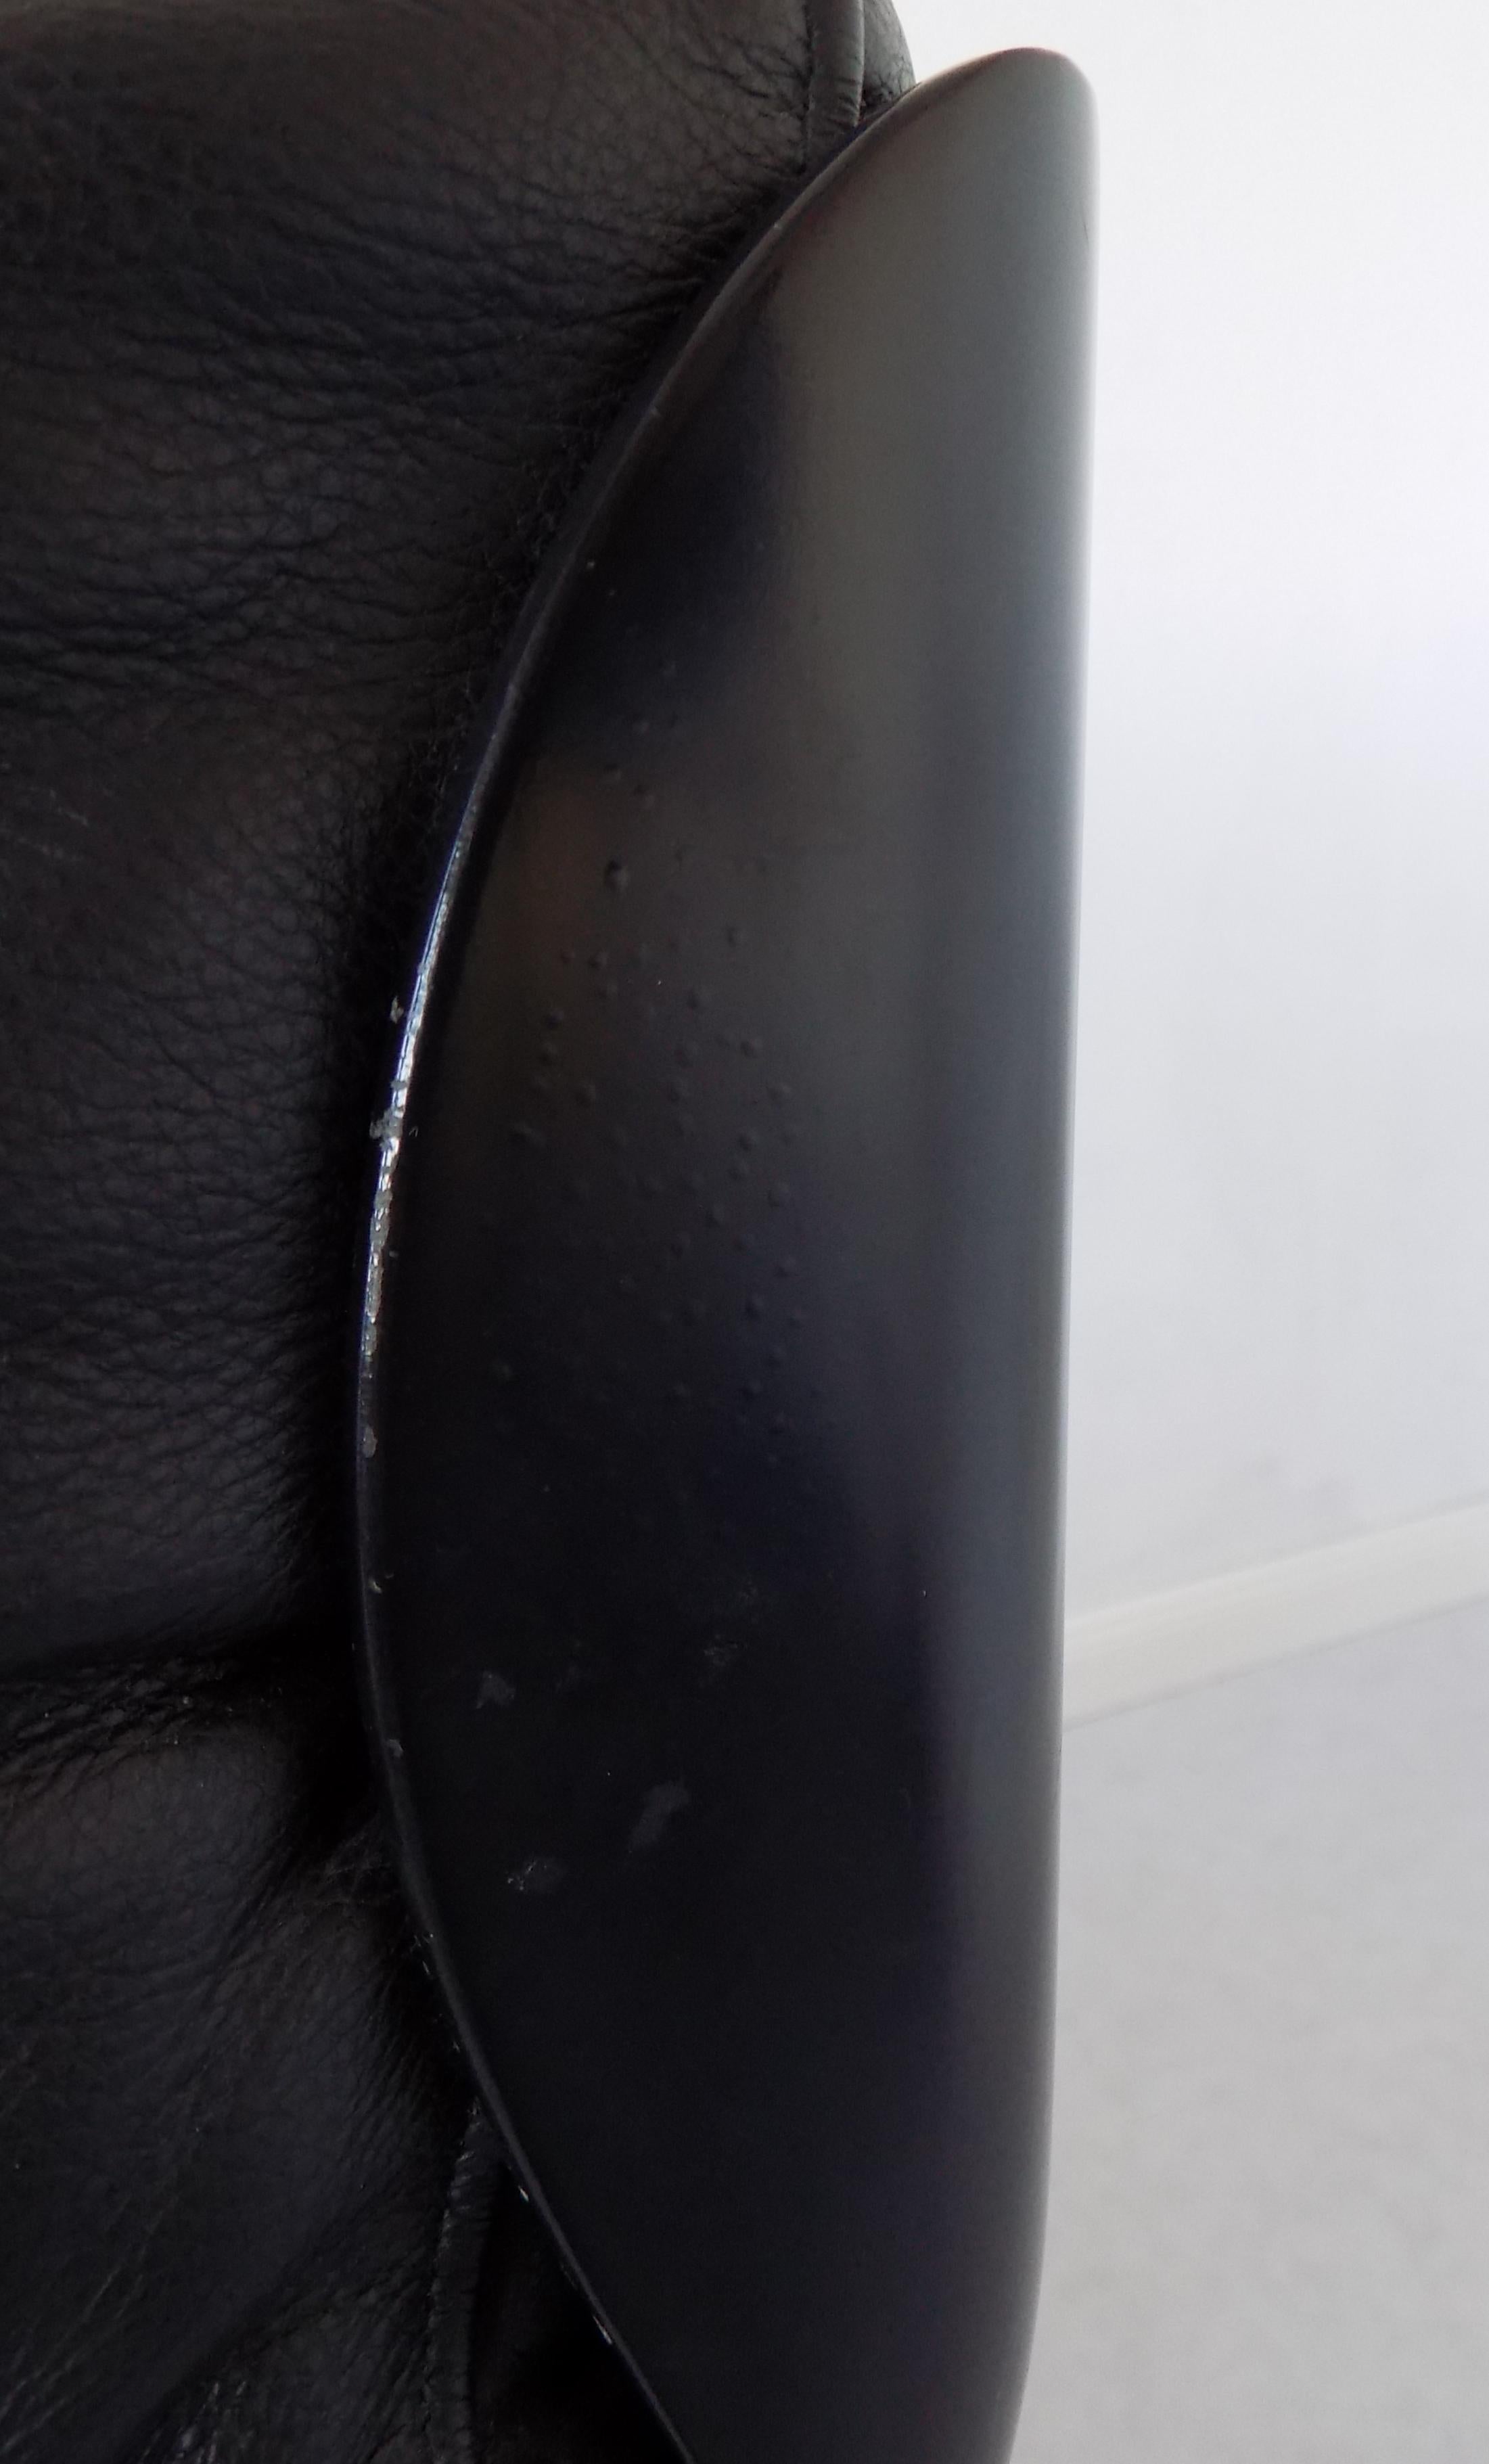 Vitsoe 620 by Dieter Rams Black Leather Lounge chair, Mid-Century modern, German 6